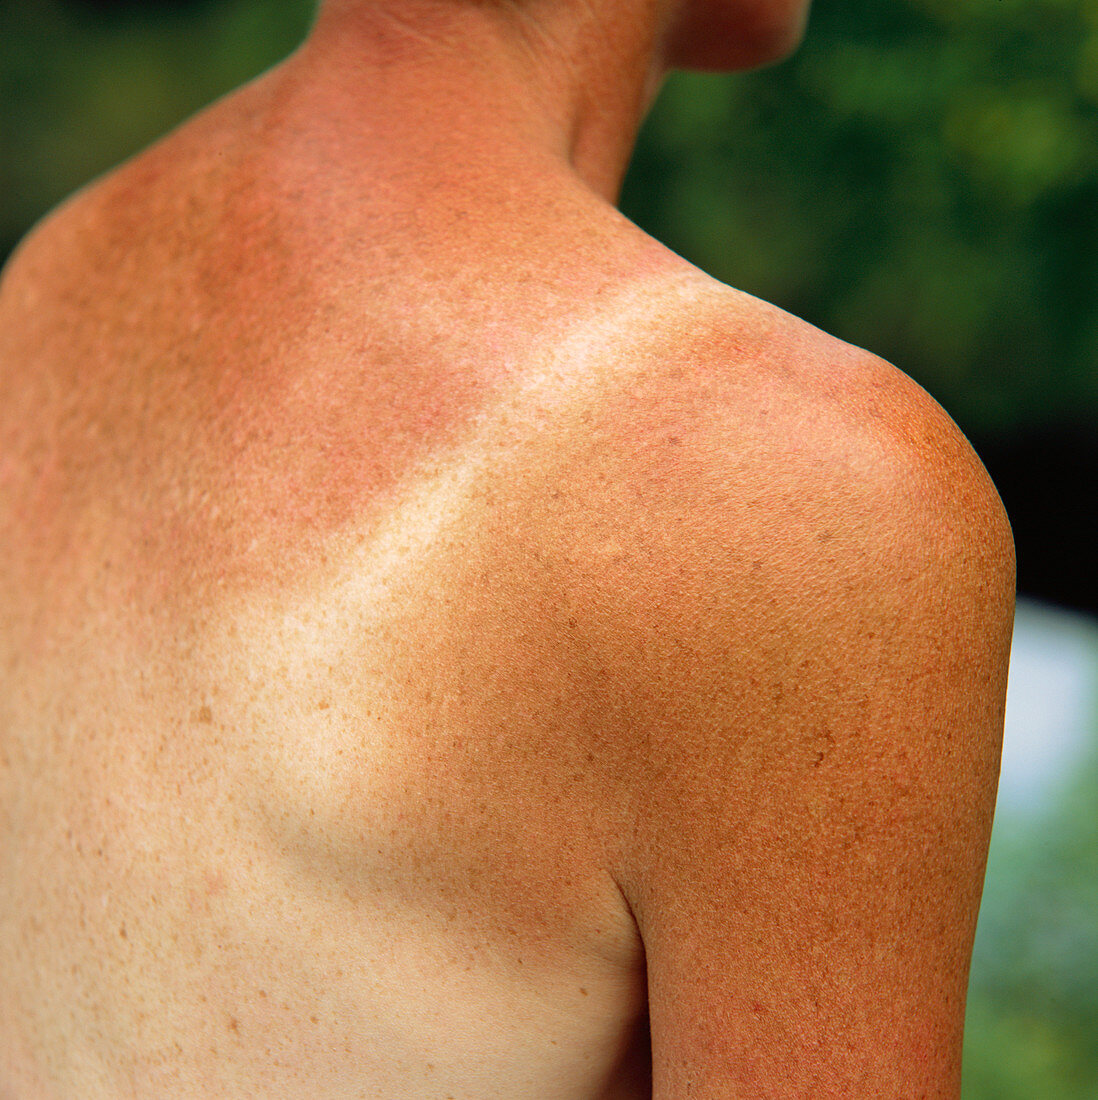 Sunburnt skin